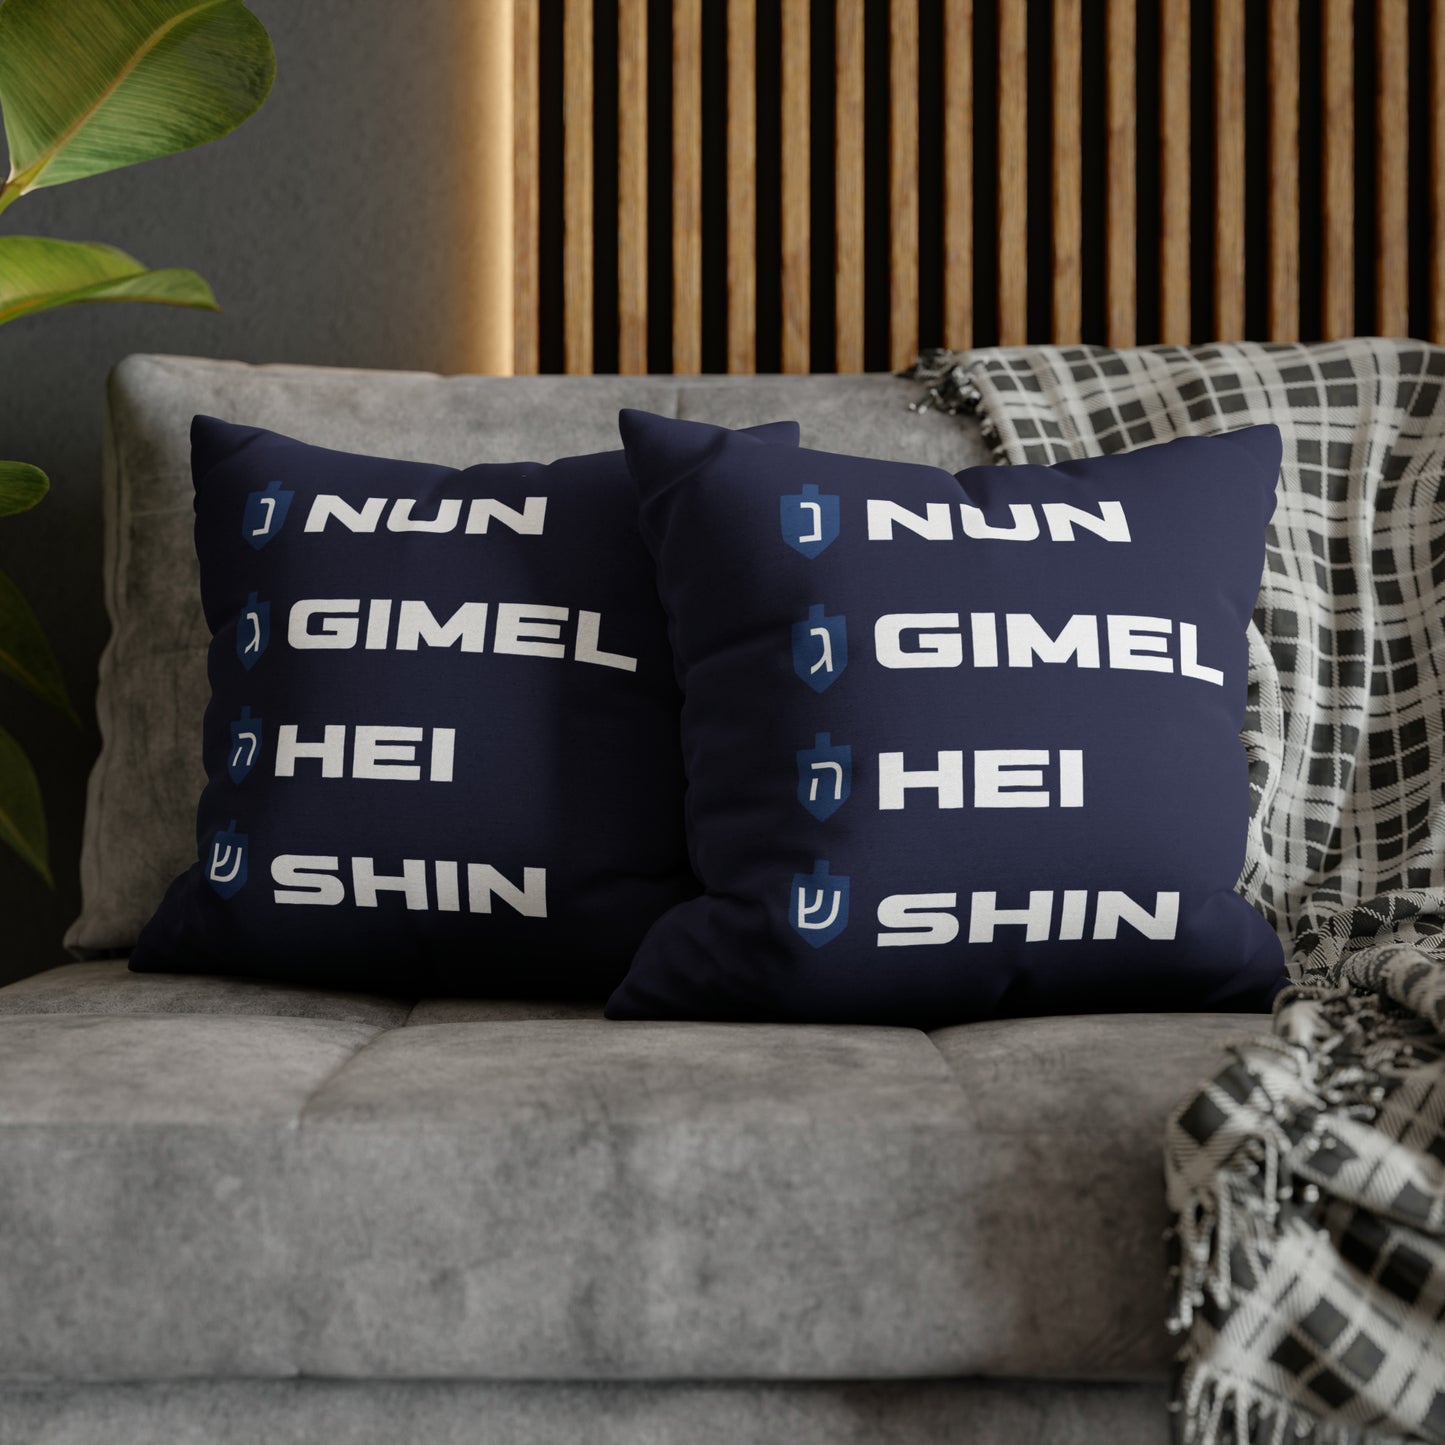 "Nun Gimel Hei Shin" Dreidel Hanukkah Pillow Cover